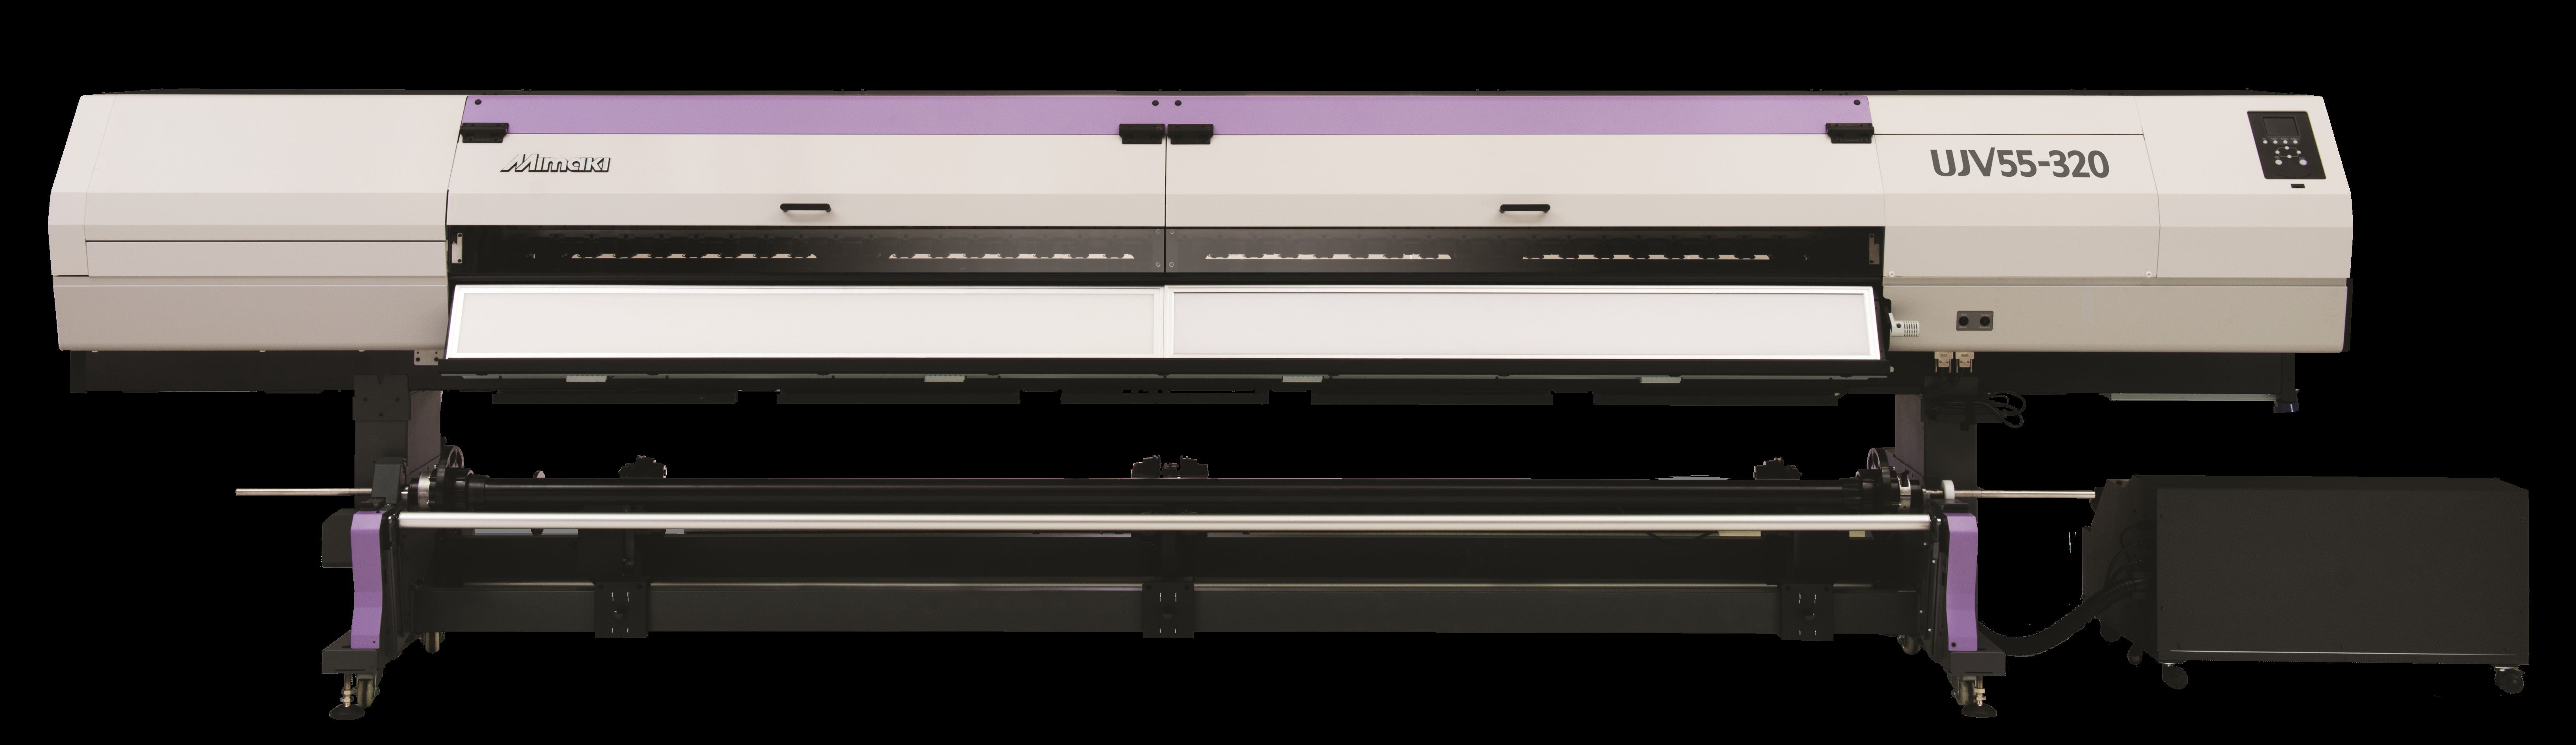 Mimaki UJV55-320 Roll-To-Roll UV Printer